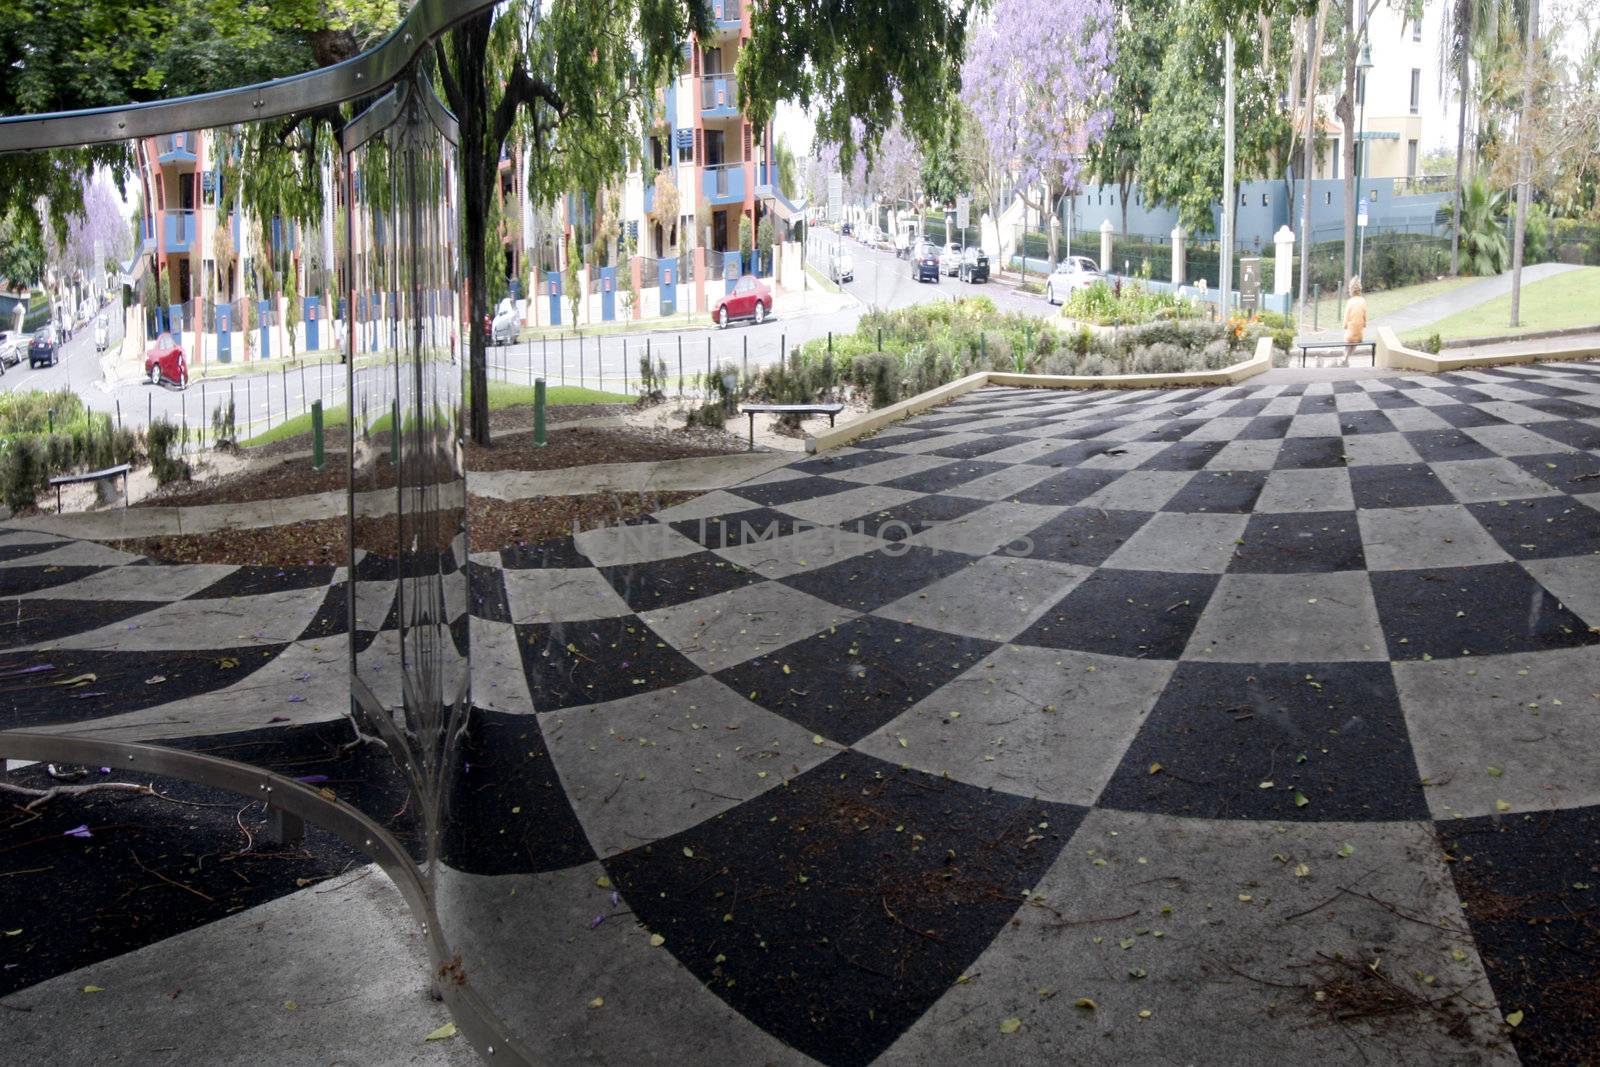 Checkered platform on the playground